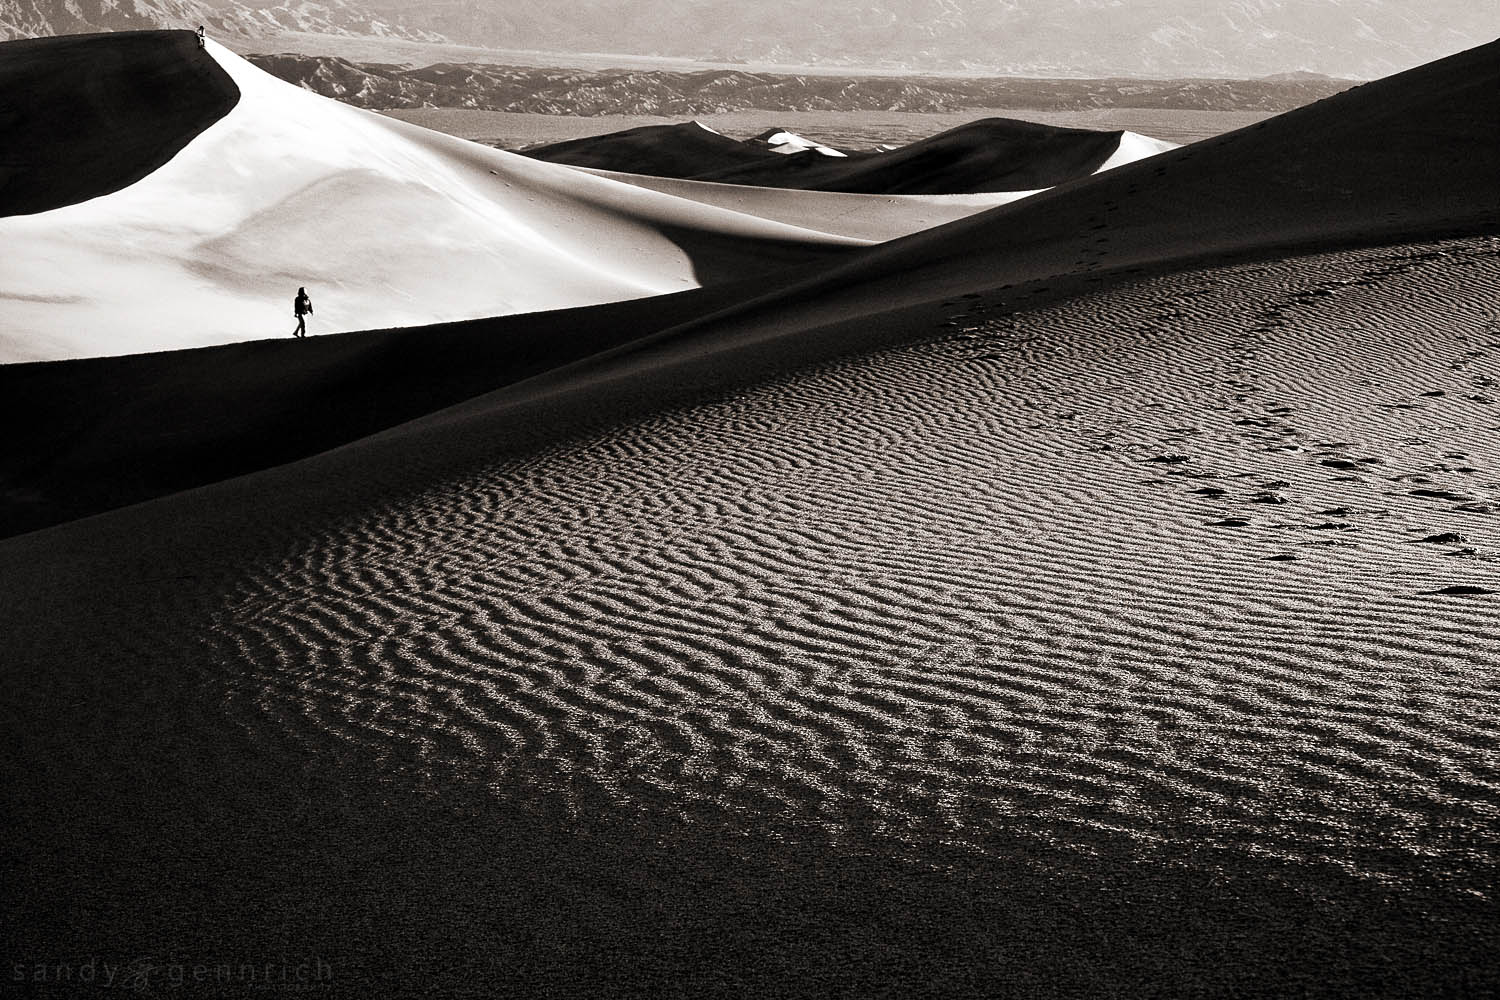 Dune Walking-Death Valley National Park